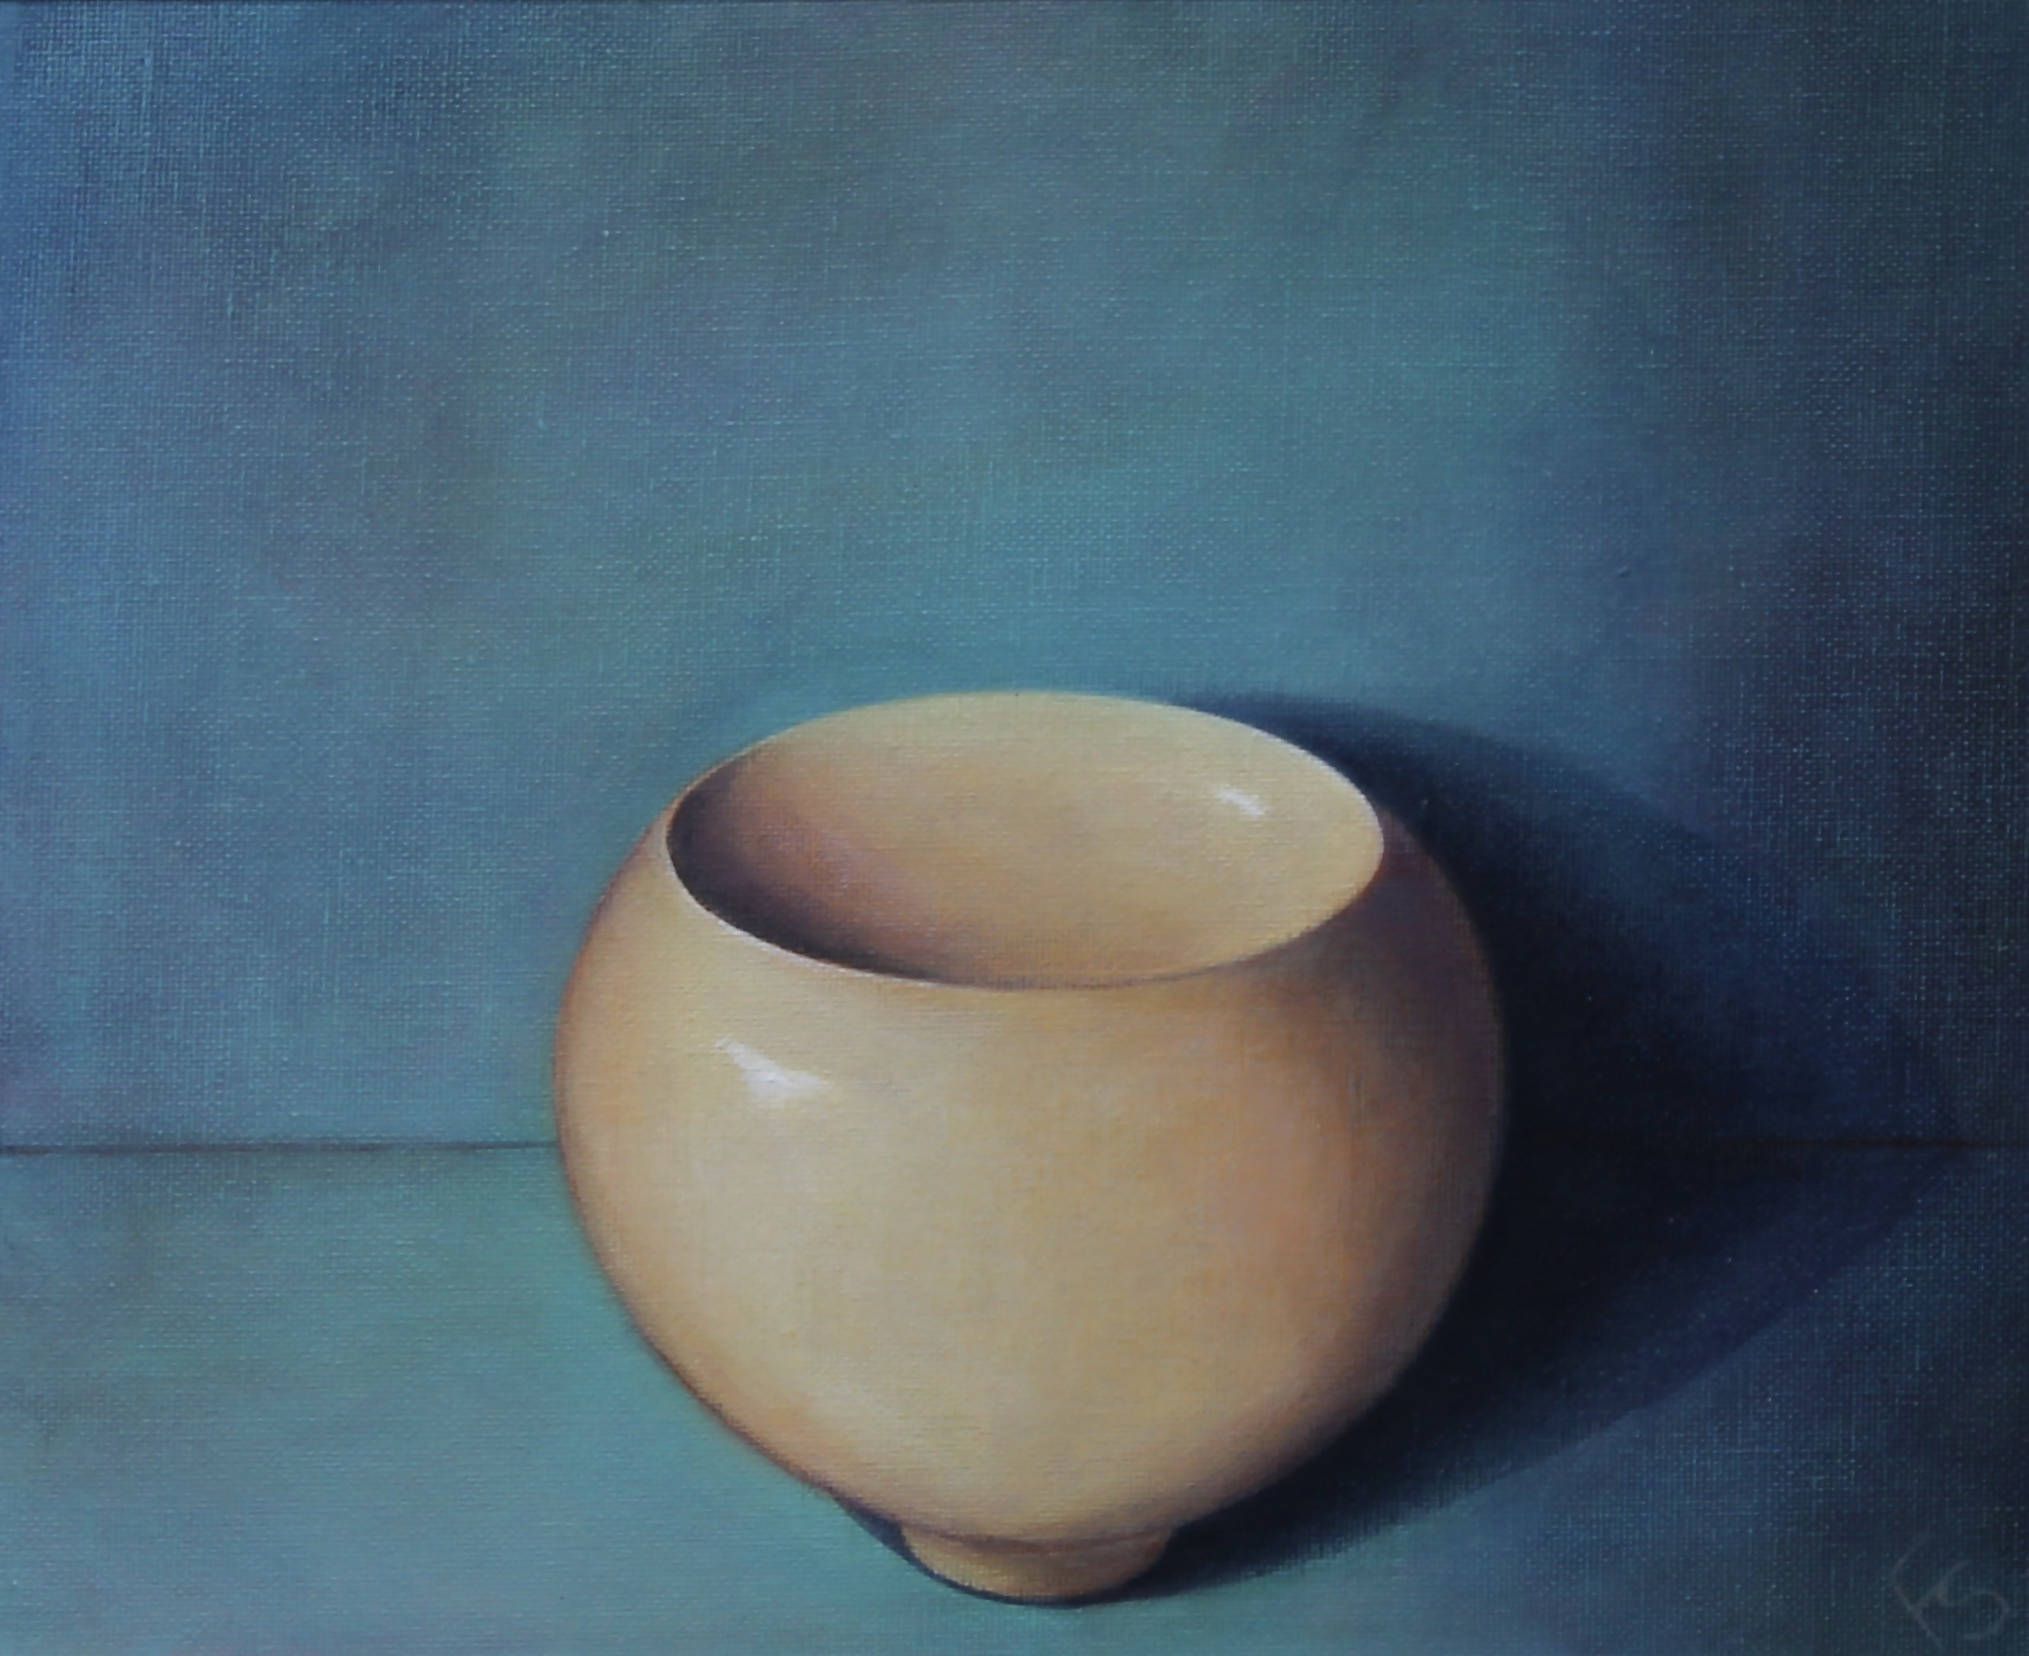 Fiona Smith, "Mother's Bowl 1", by Fiona Smith